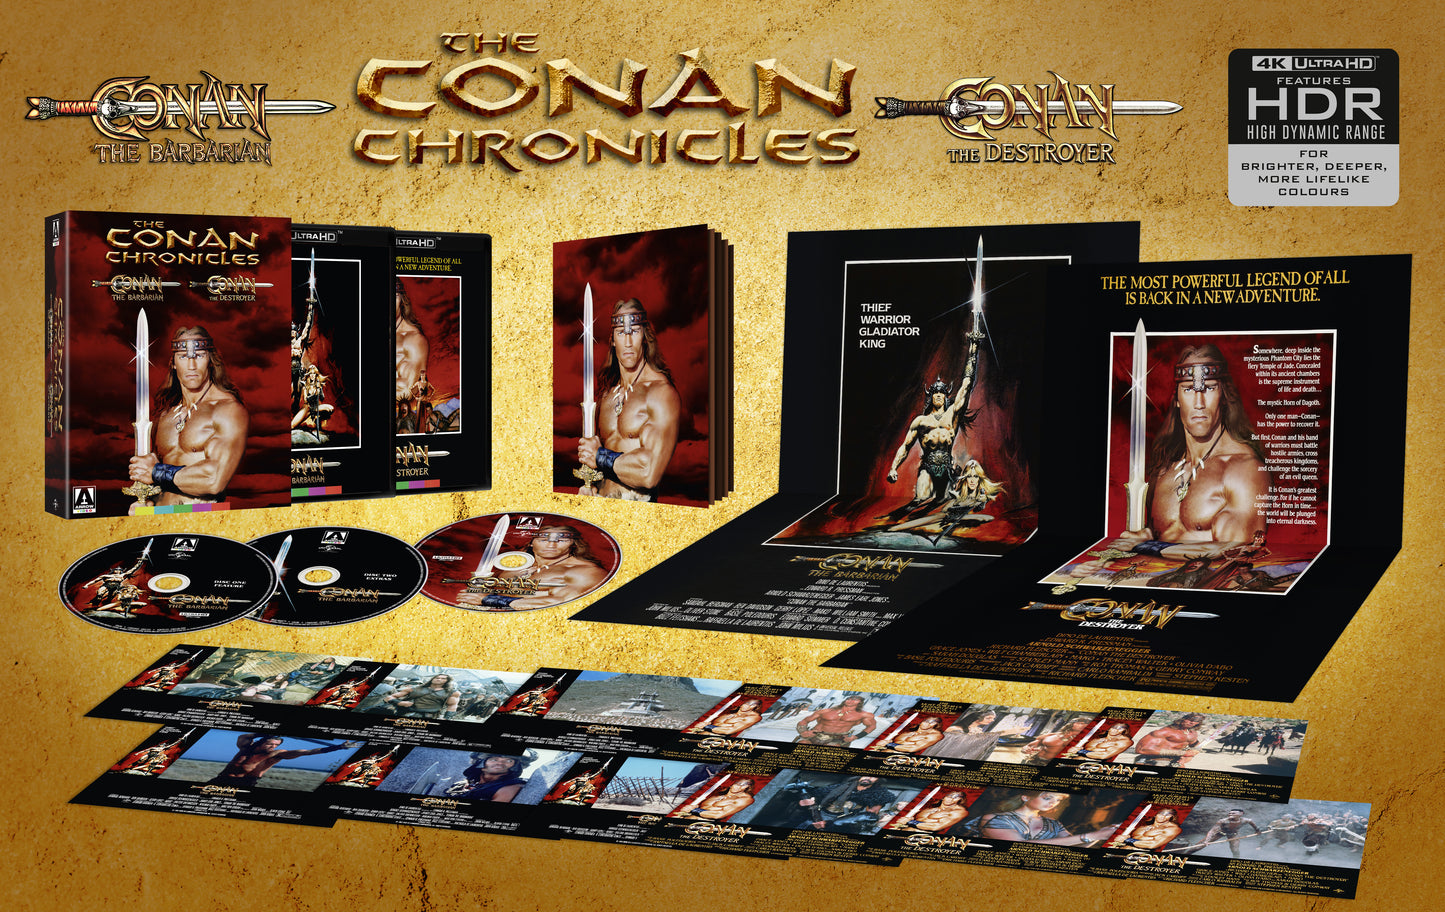 The Conan Chronicles Limited Edition Arrow Video 4K UHD Box Set [NEW]